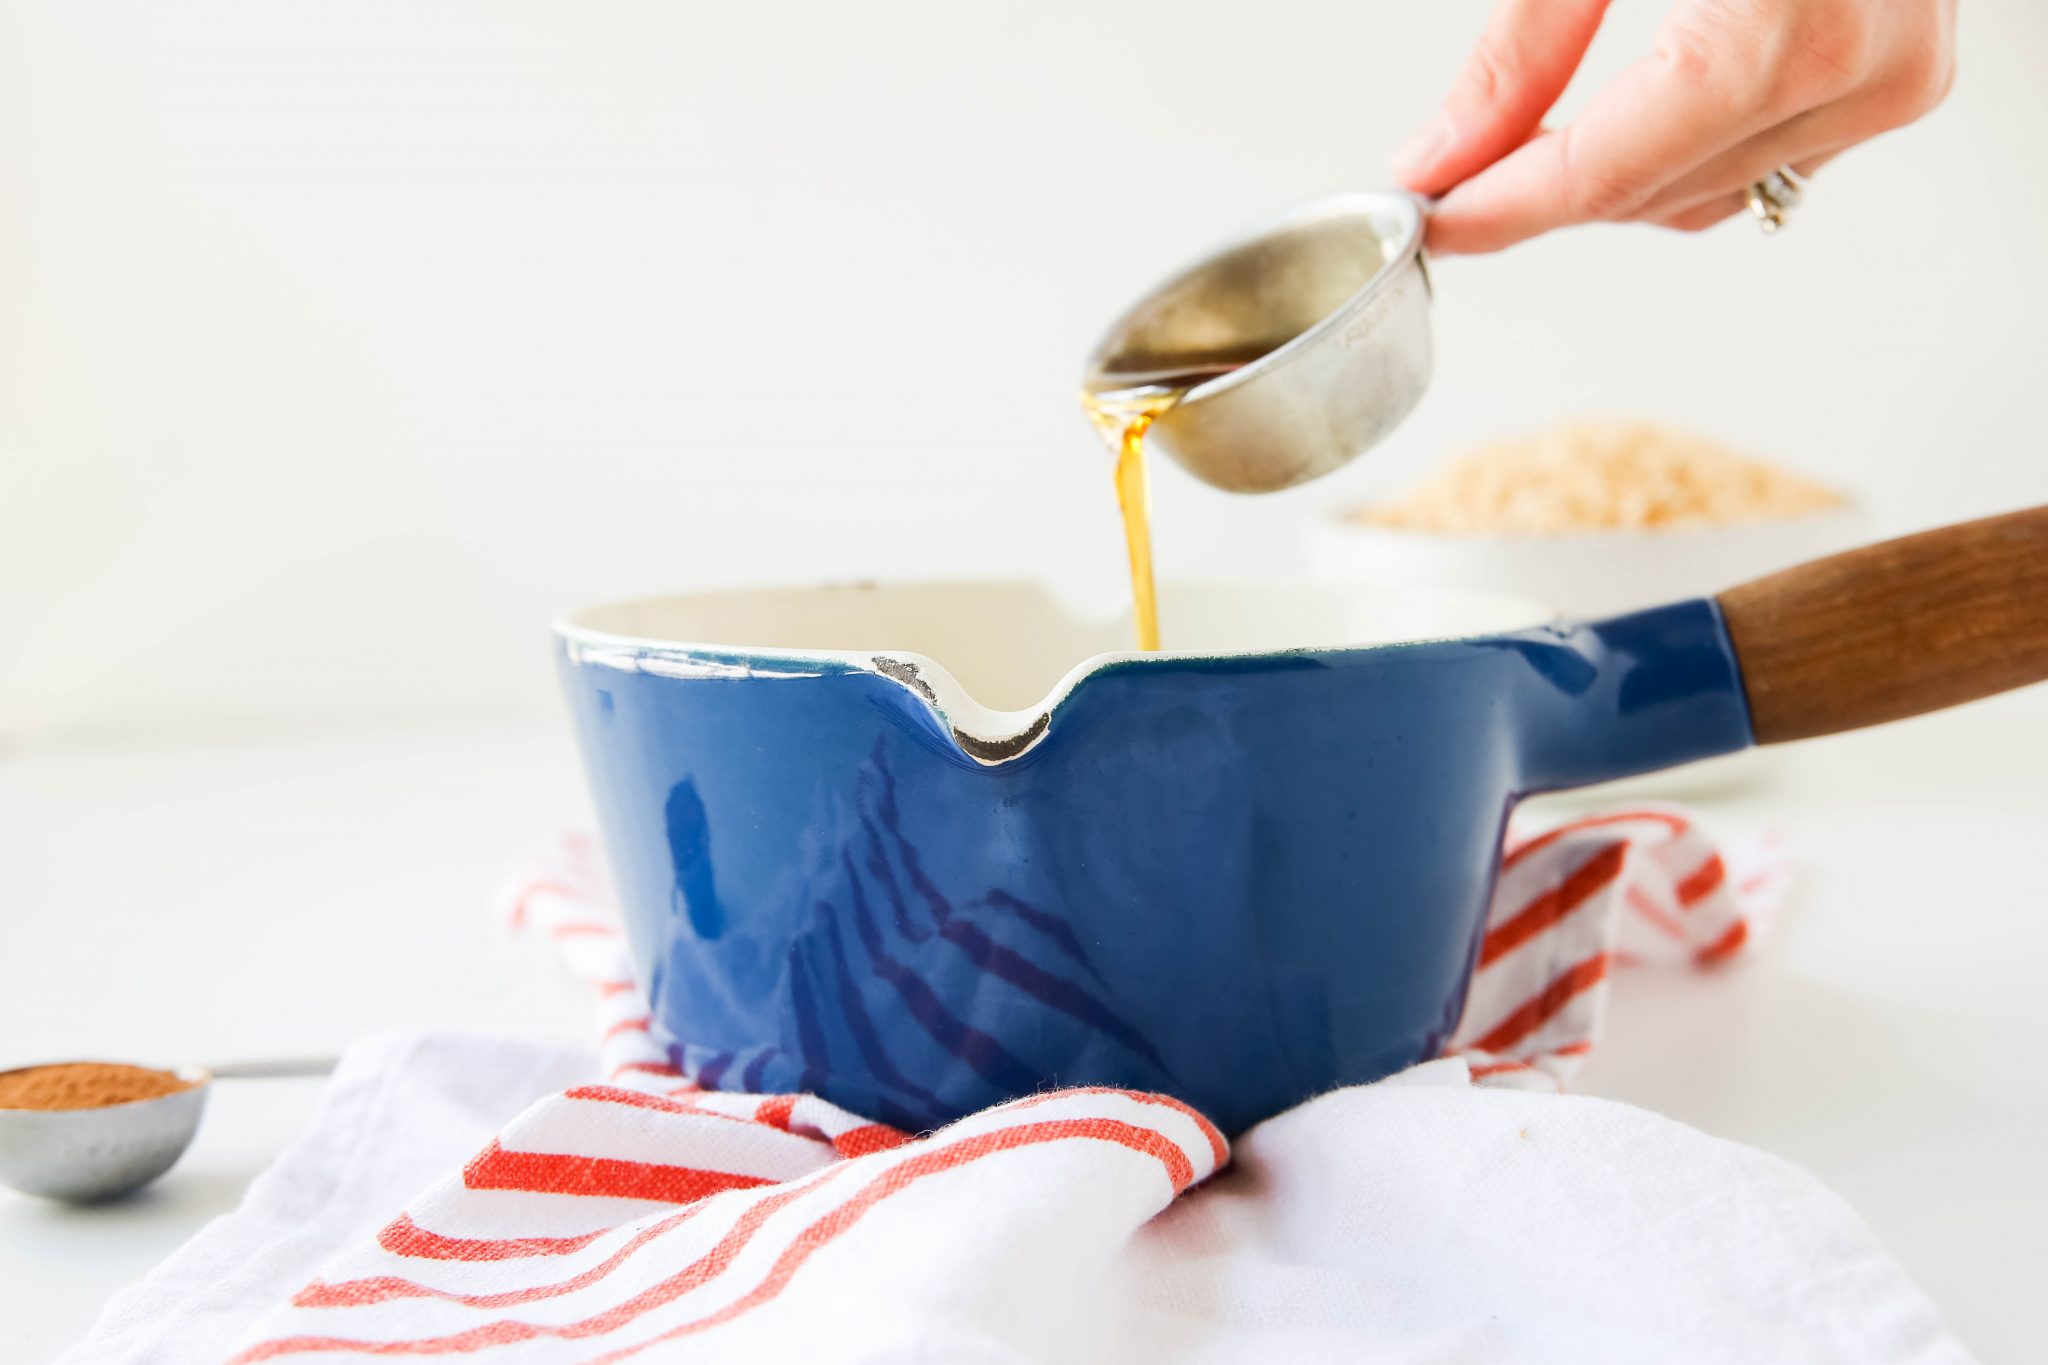 Homemade rice crispy treats - Dr. Pingel